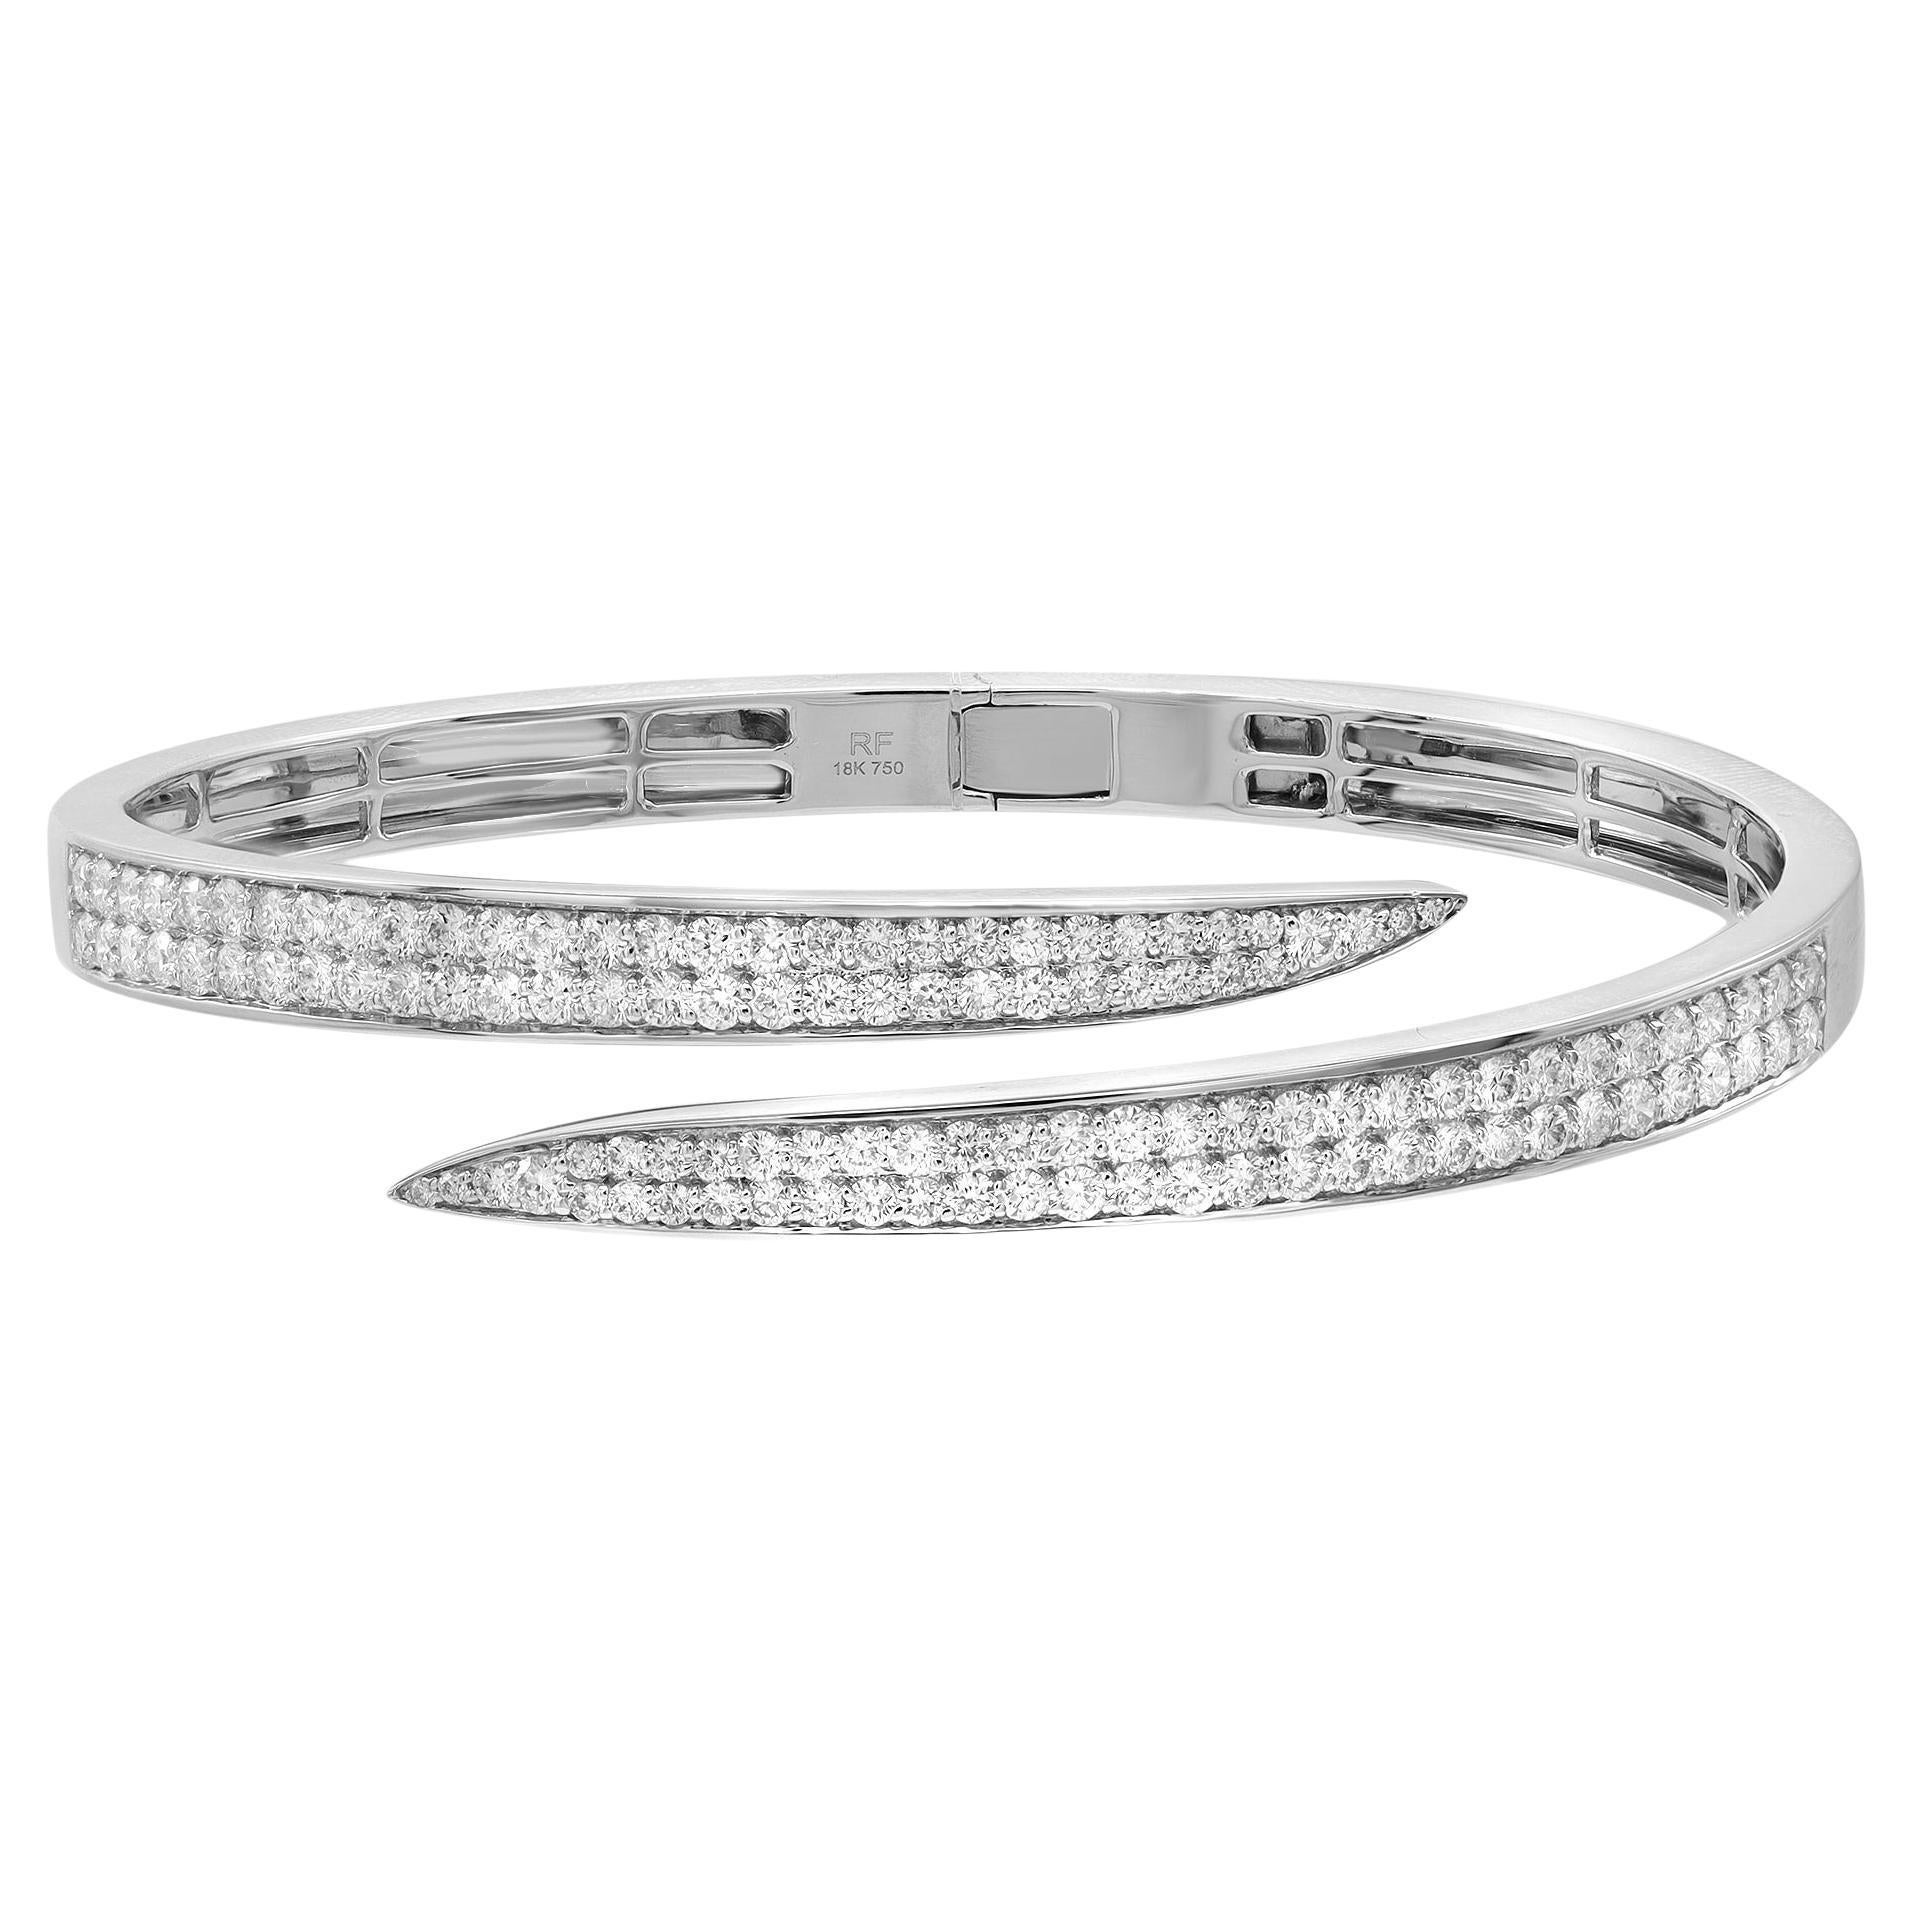 Rachel Koen Pave Set Round Cut Diamond Bangle Bracelet 18K White Gold 2.99cttw For Sale